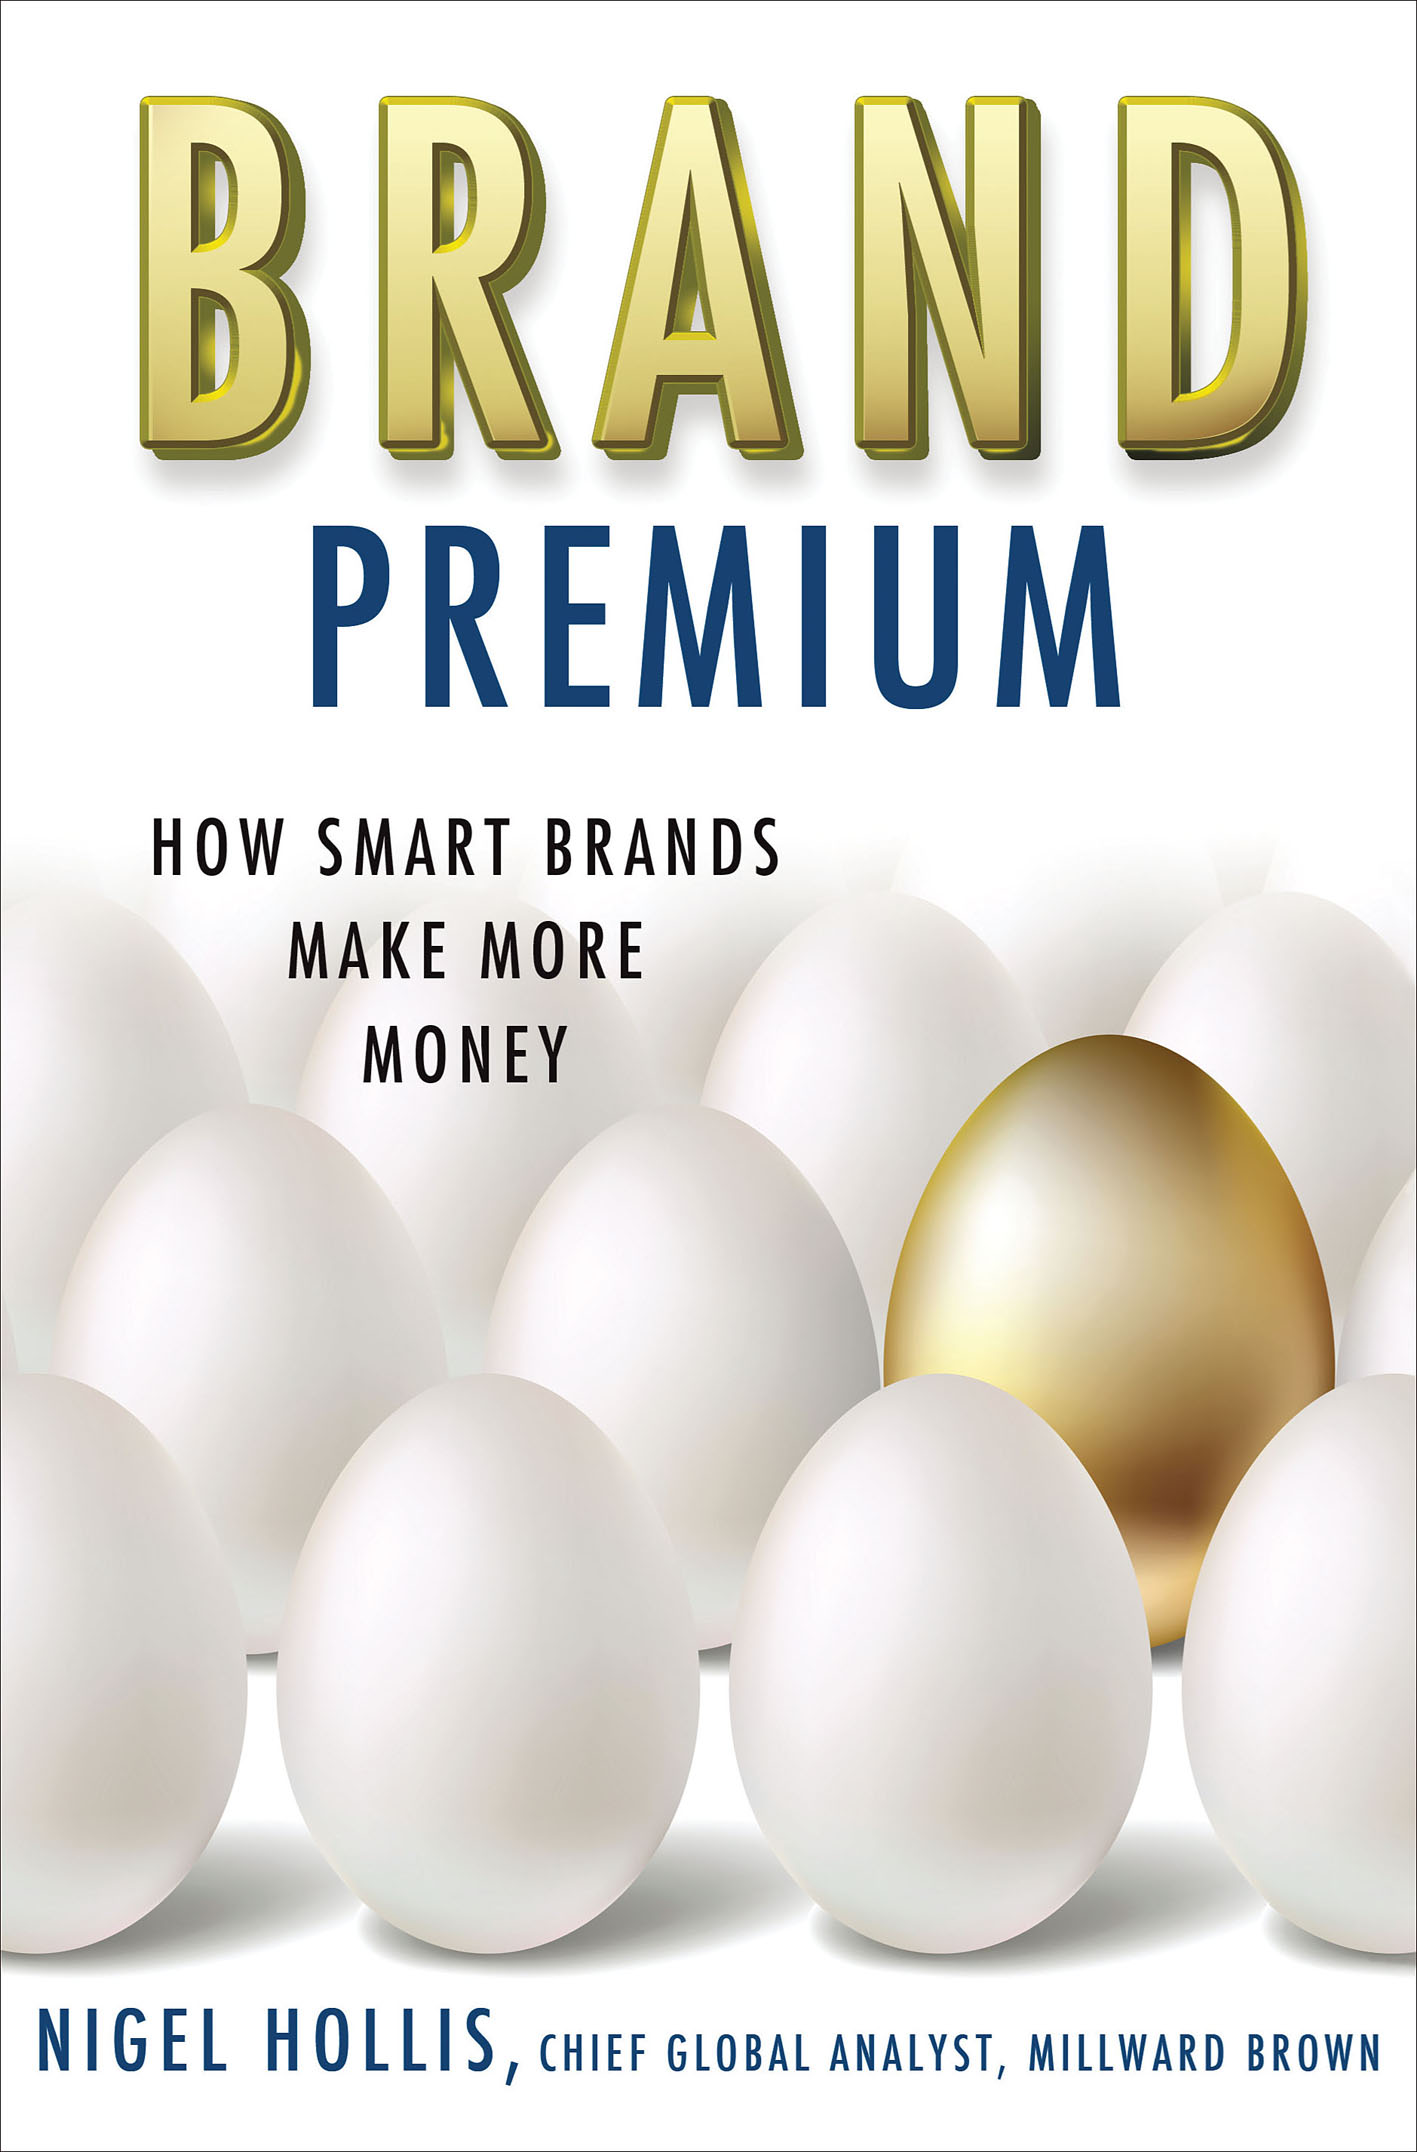 Brand Premium: How Smart Brands Make More Money by Nigel Hollis